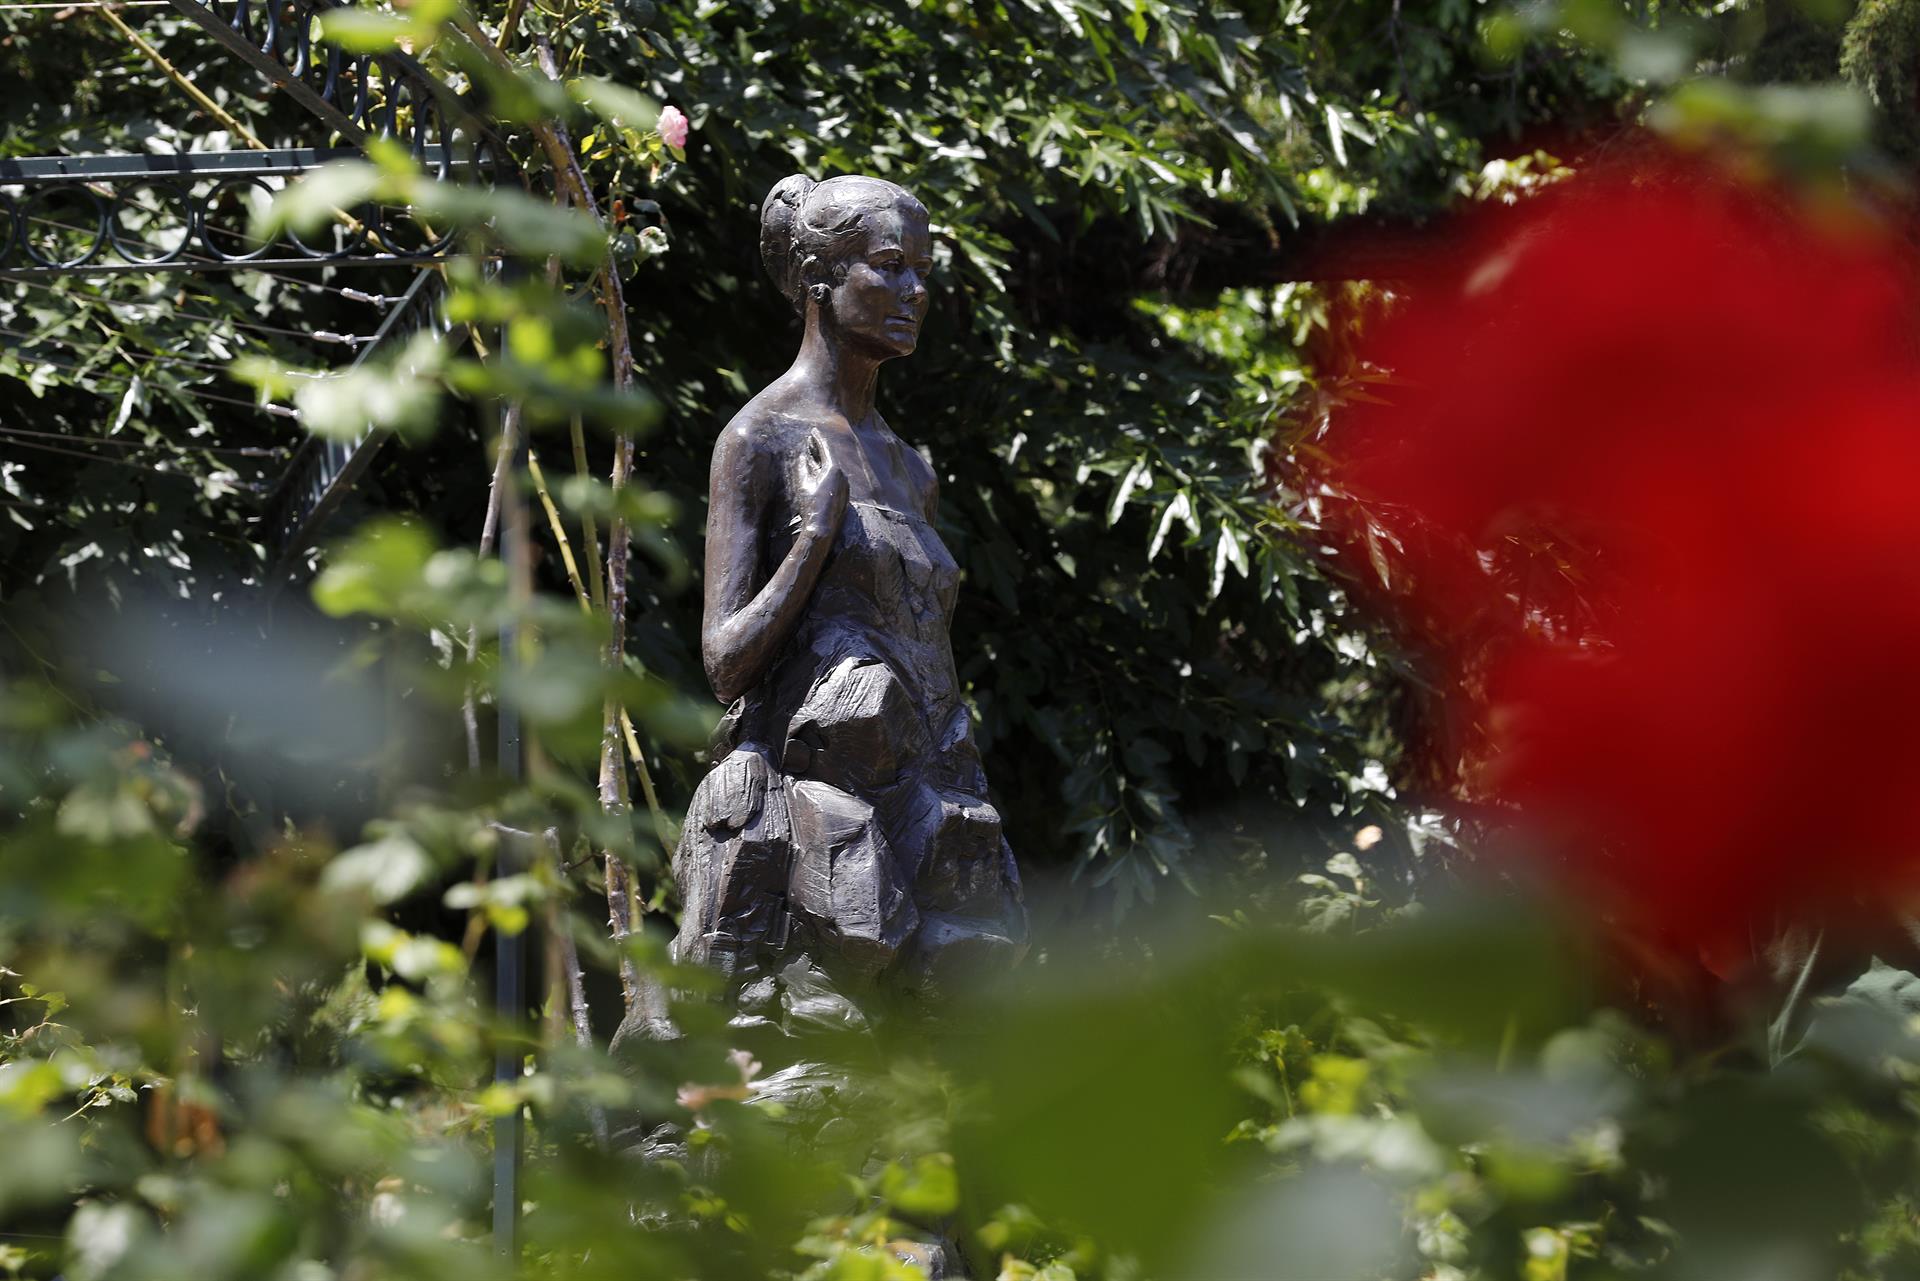 A statue of Princess Grace Kelly at the Princess Grace Rose Garden in Monaco, 14 June 2022 (issued 10 September 2022). EFE/EPA/SEBASTIEN NOGIER
